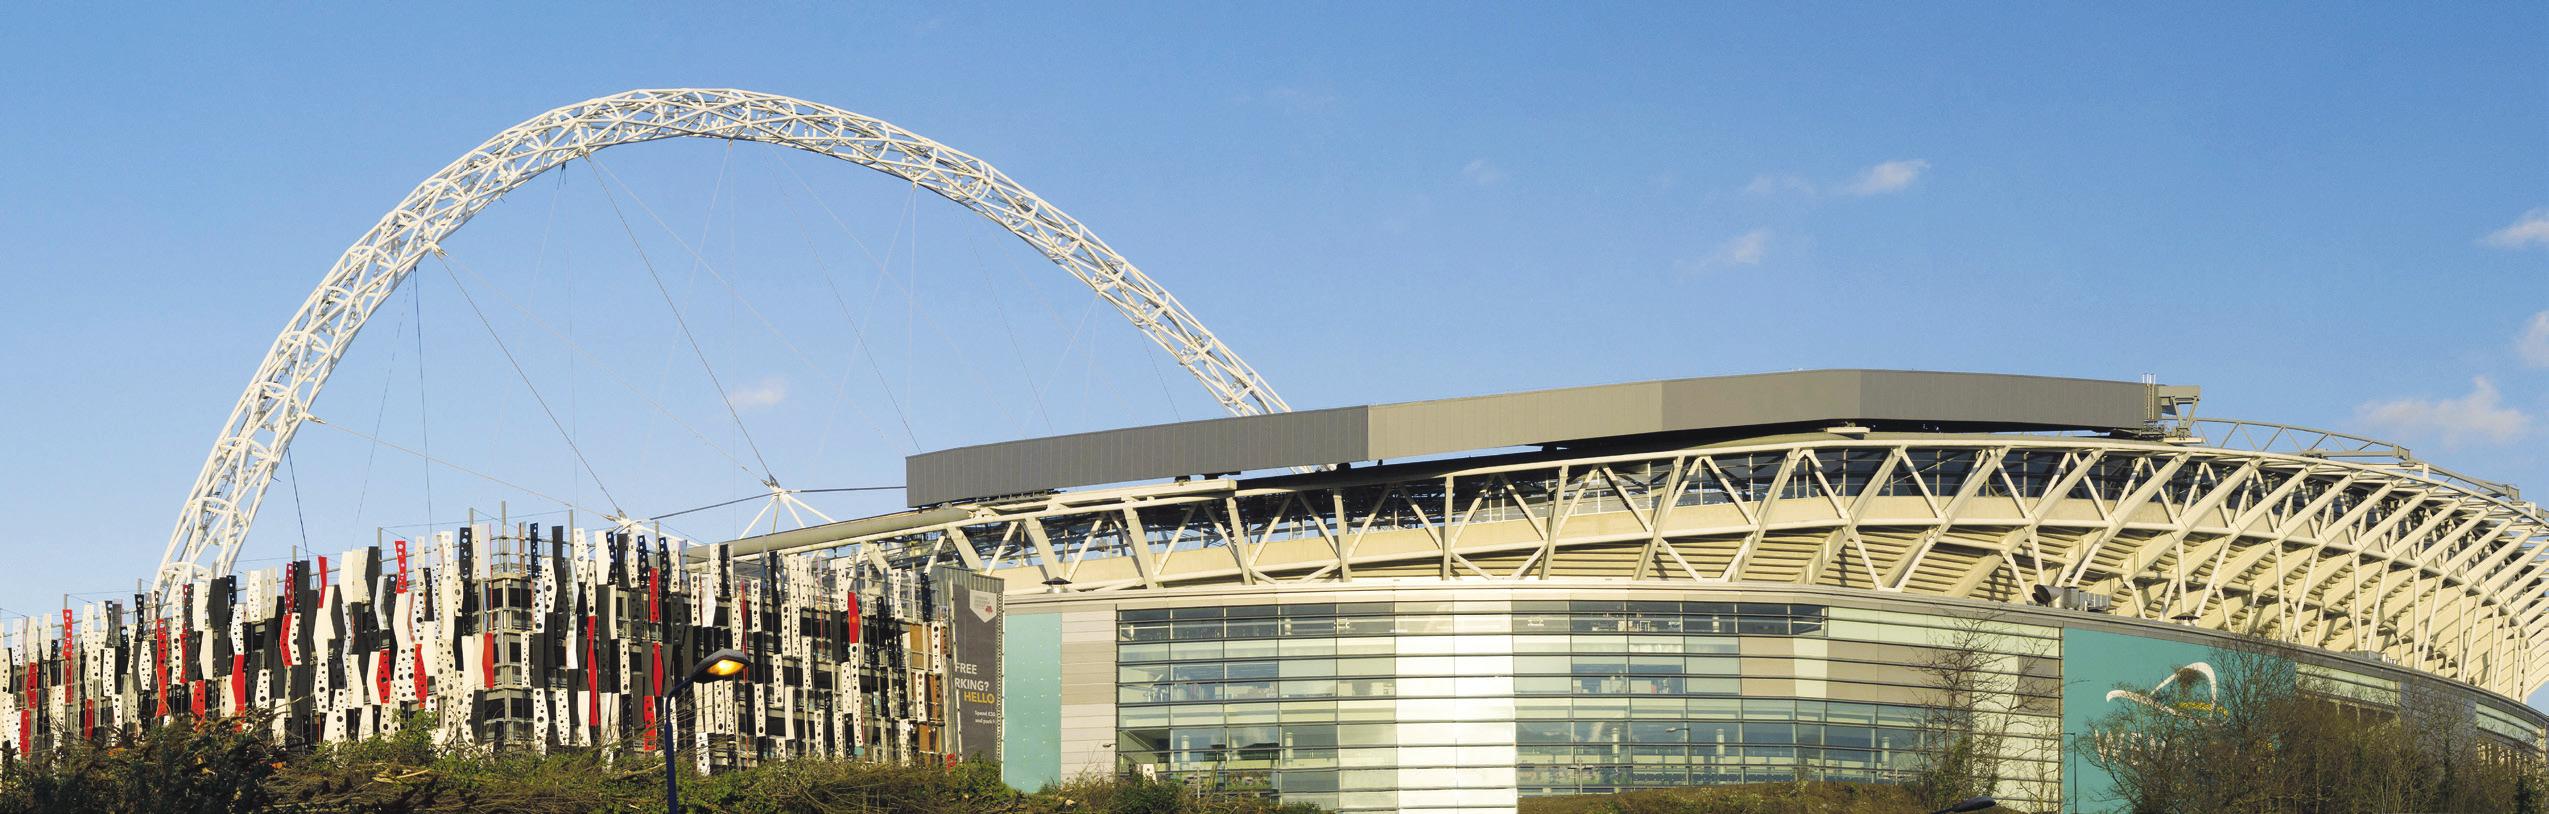 Endspiel-Ort 2020: Das Wembley-Stadion in London.